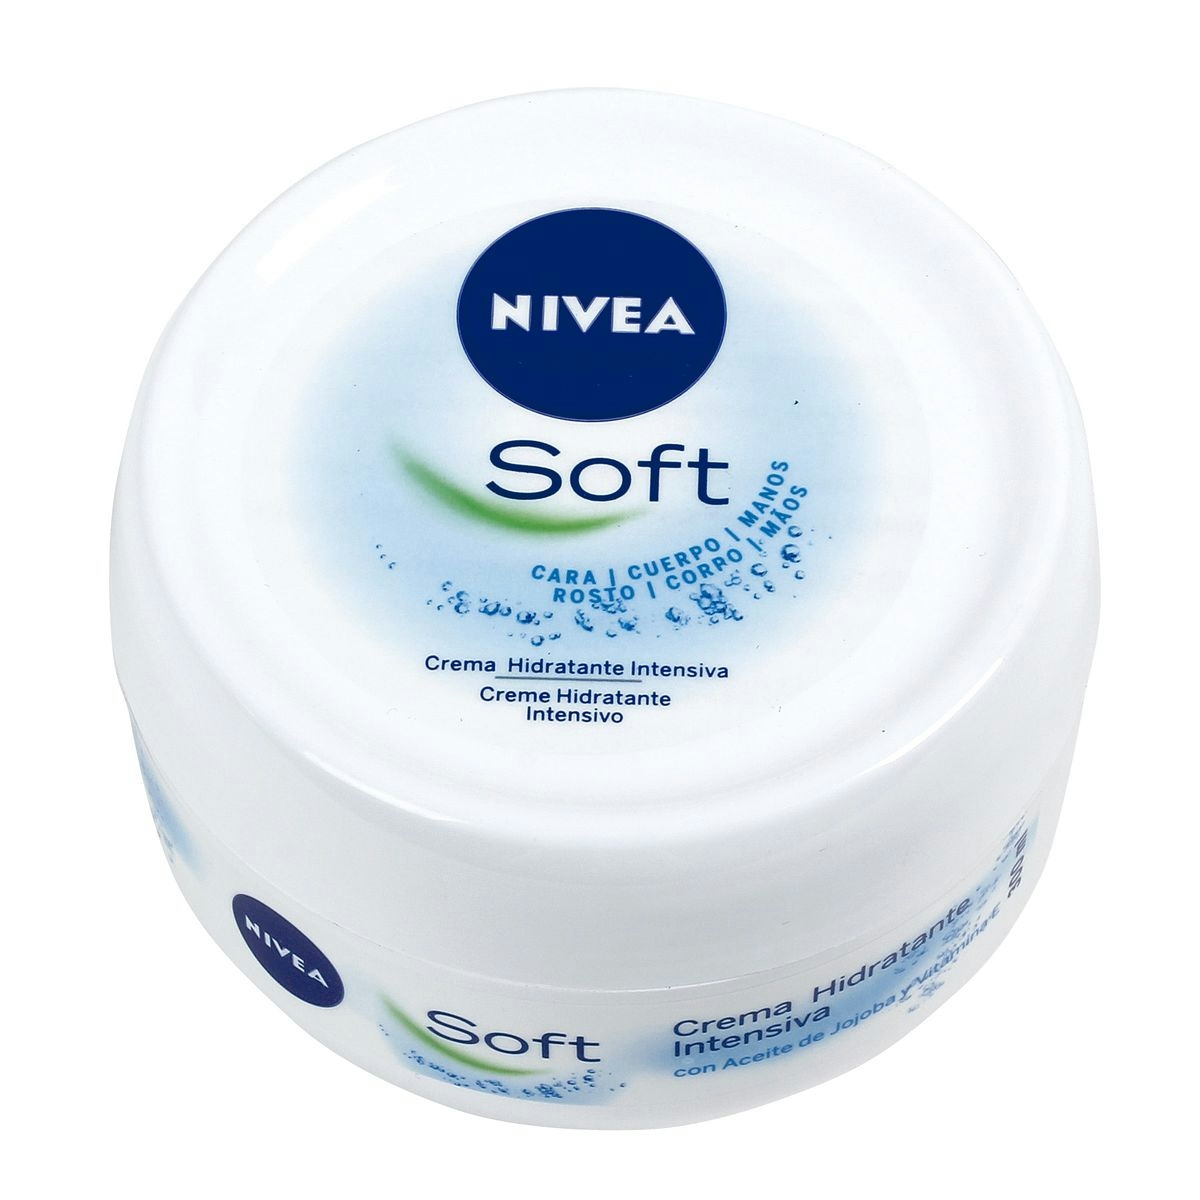 Crema soft NIVEA tarro 300 ml